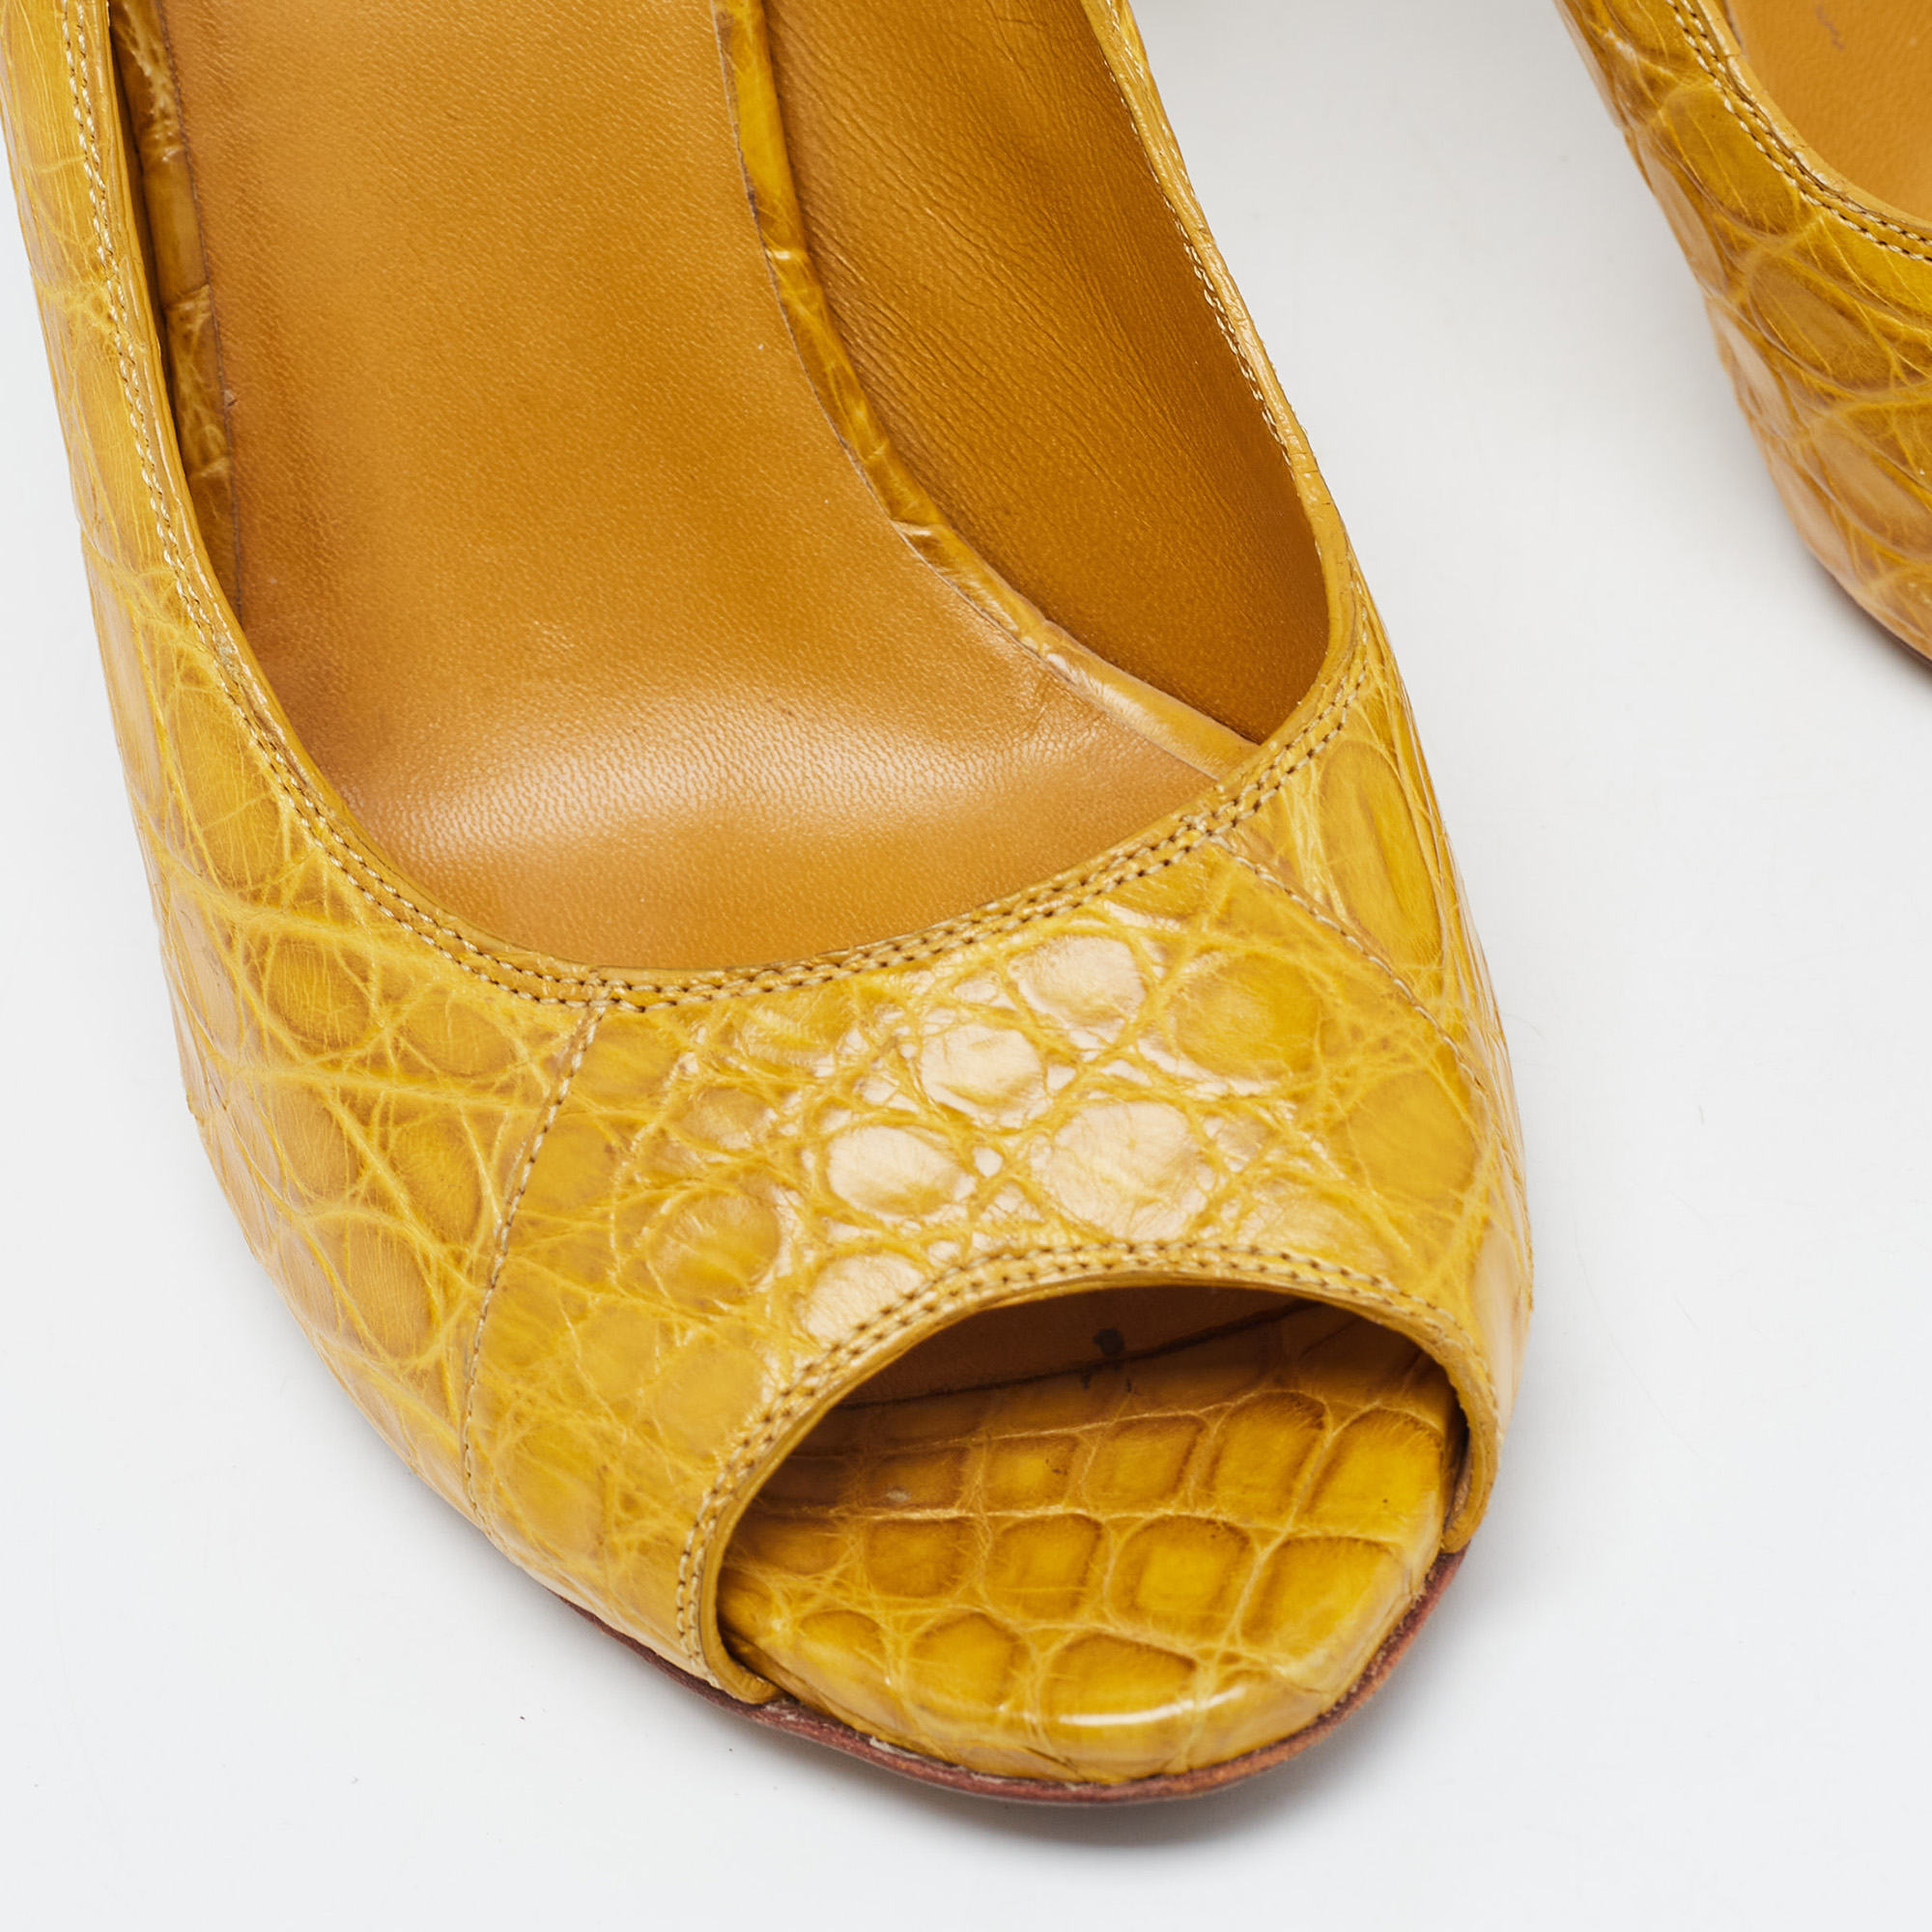 Gucci Yellow Crocodile  Peep Toe Pumps Size 39.5